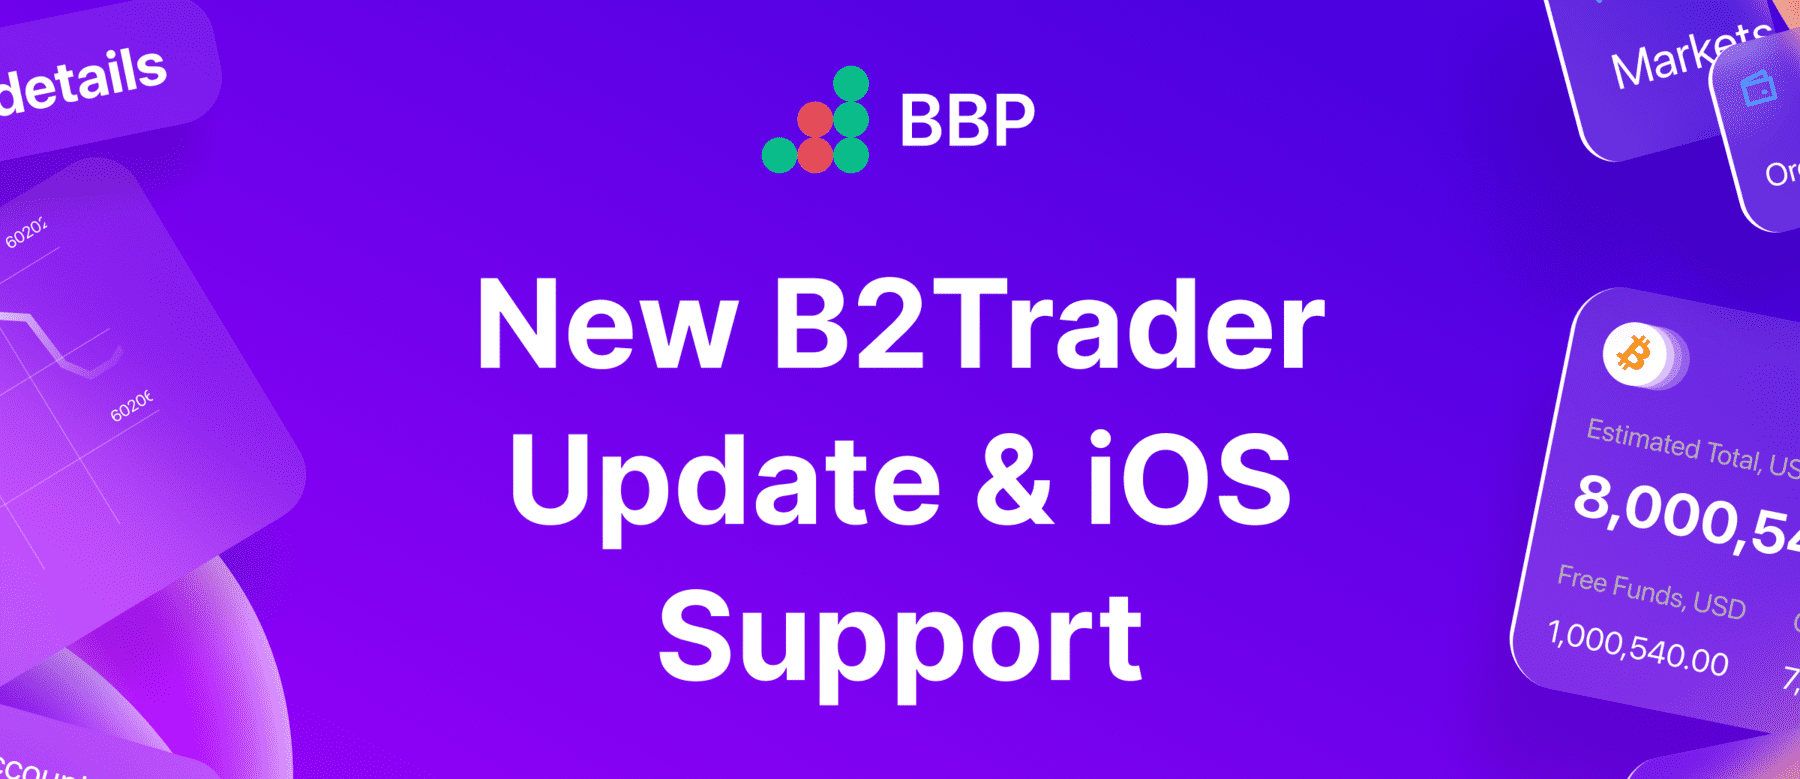 介绍 B2Trader v1.1：BBP Prime、增强报告与定制功能及 iOS 支持